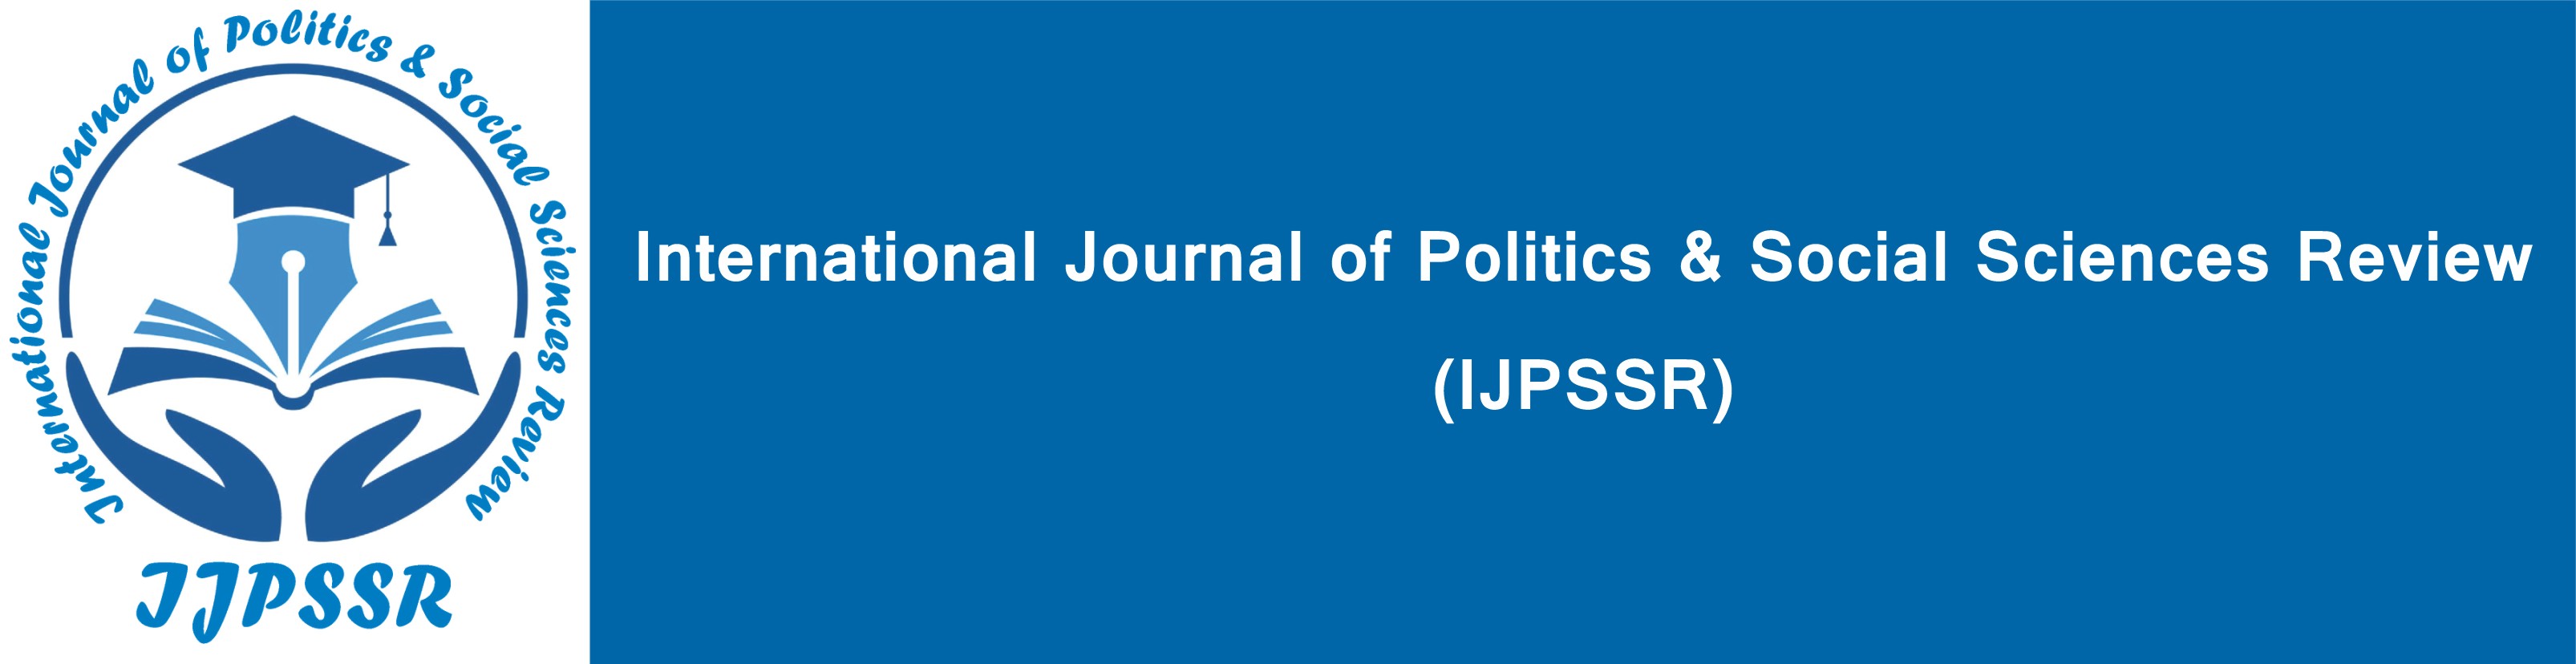 International Journal of Poltics & Social Sciences Review (IJPSSR)